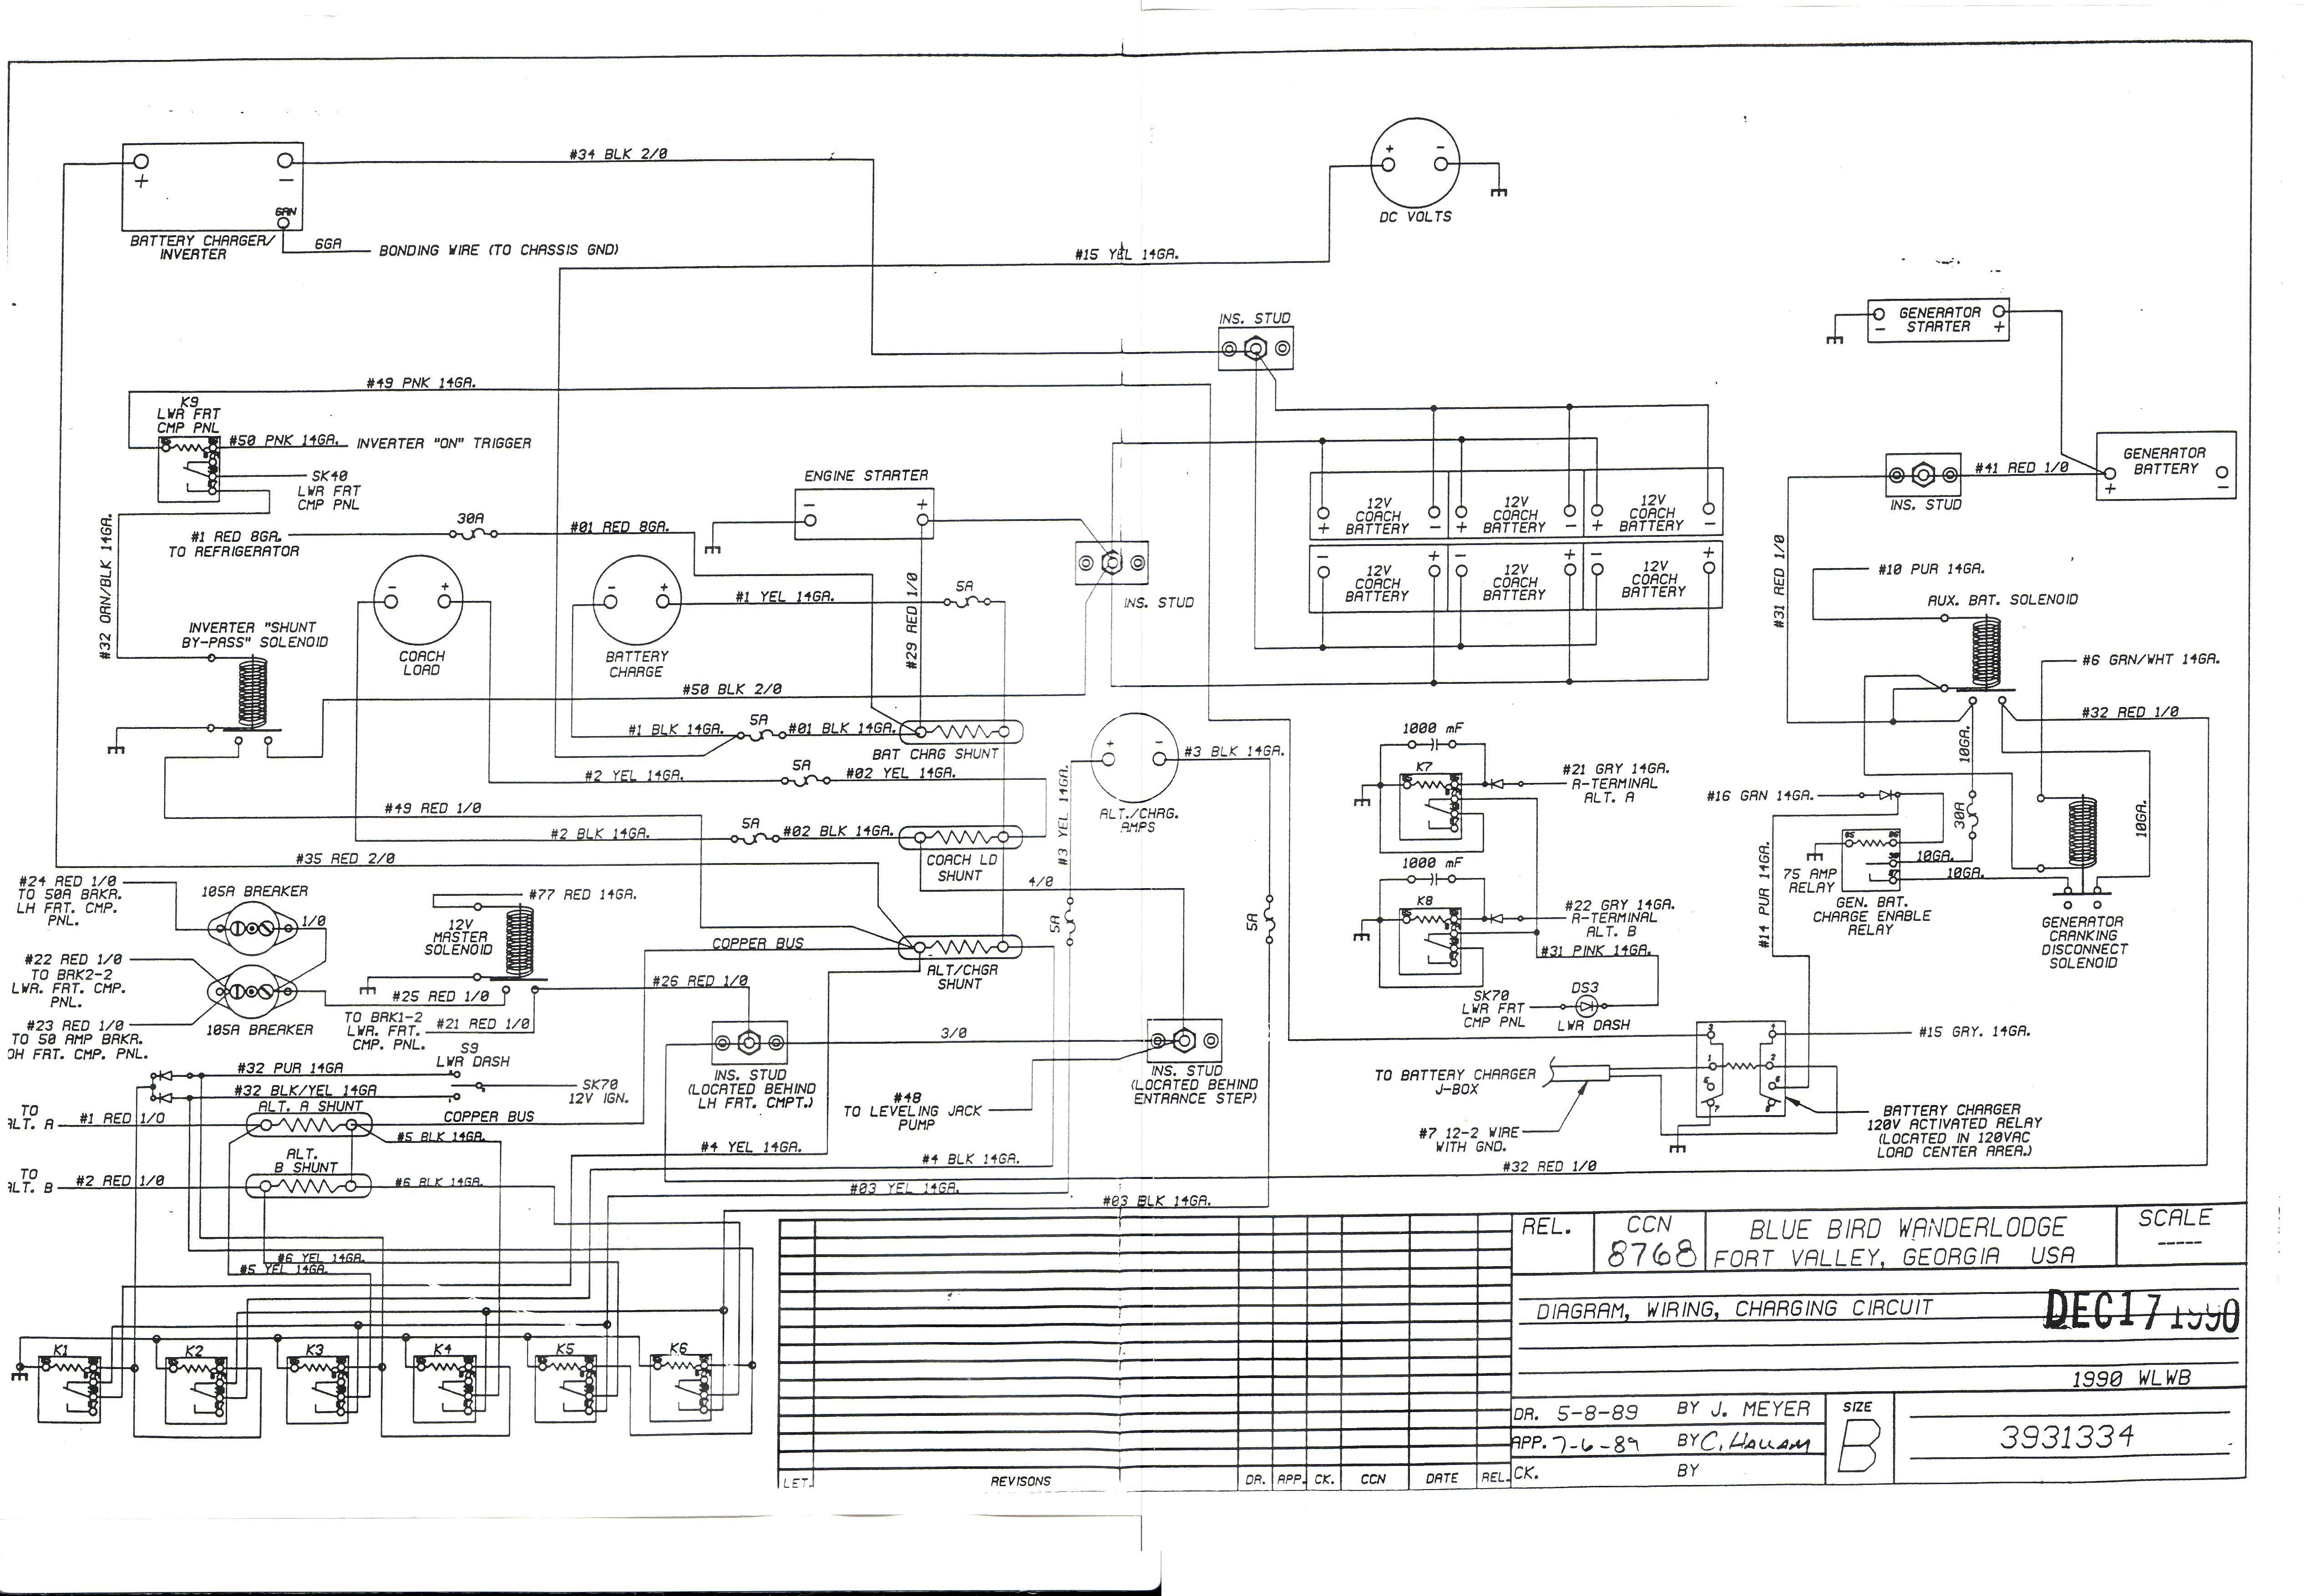 Bluebird Wiring Diagram - Simple Wiring Diagrams - Bluebird Bus Wiring Diagram